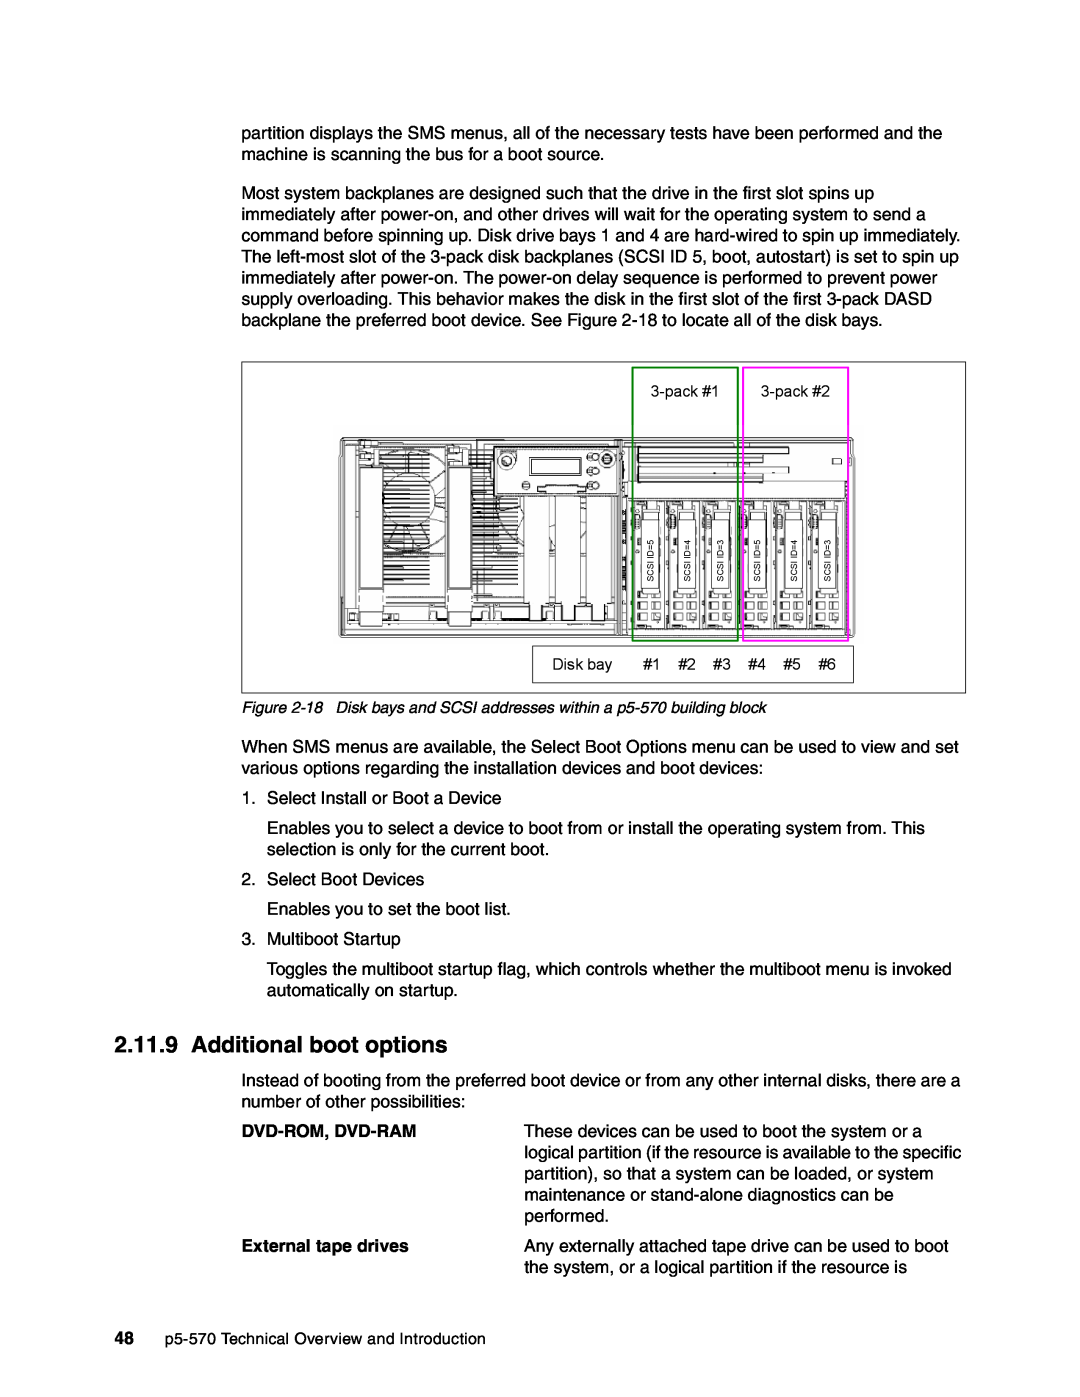 IBM P5 570 manual 2.11.9Additional boot options, Dvd-Rom, Dvd-Ram, External tape drives 